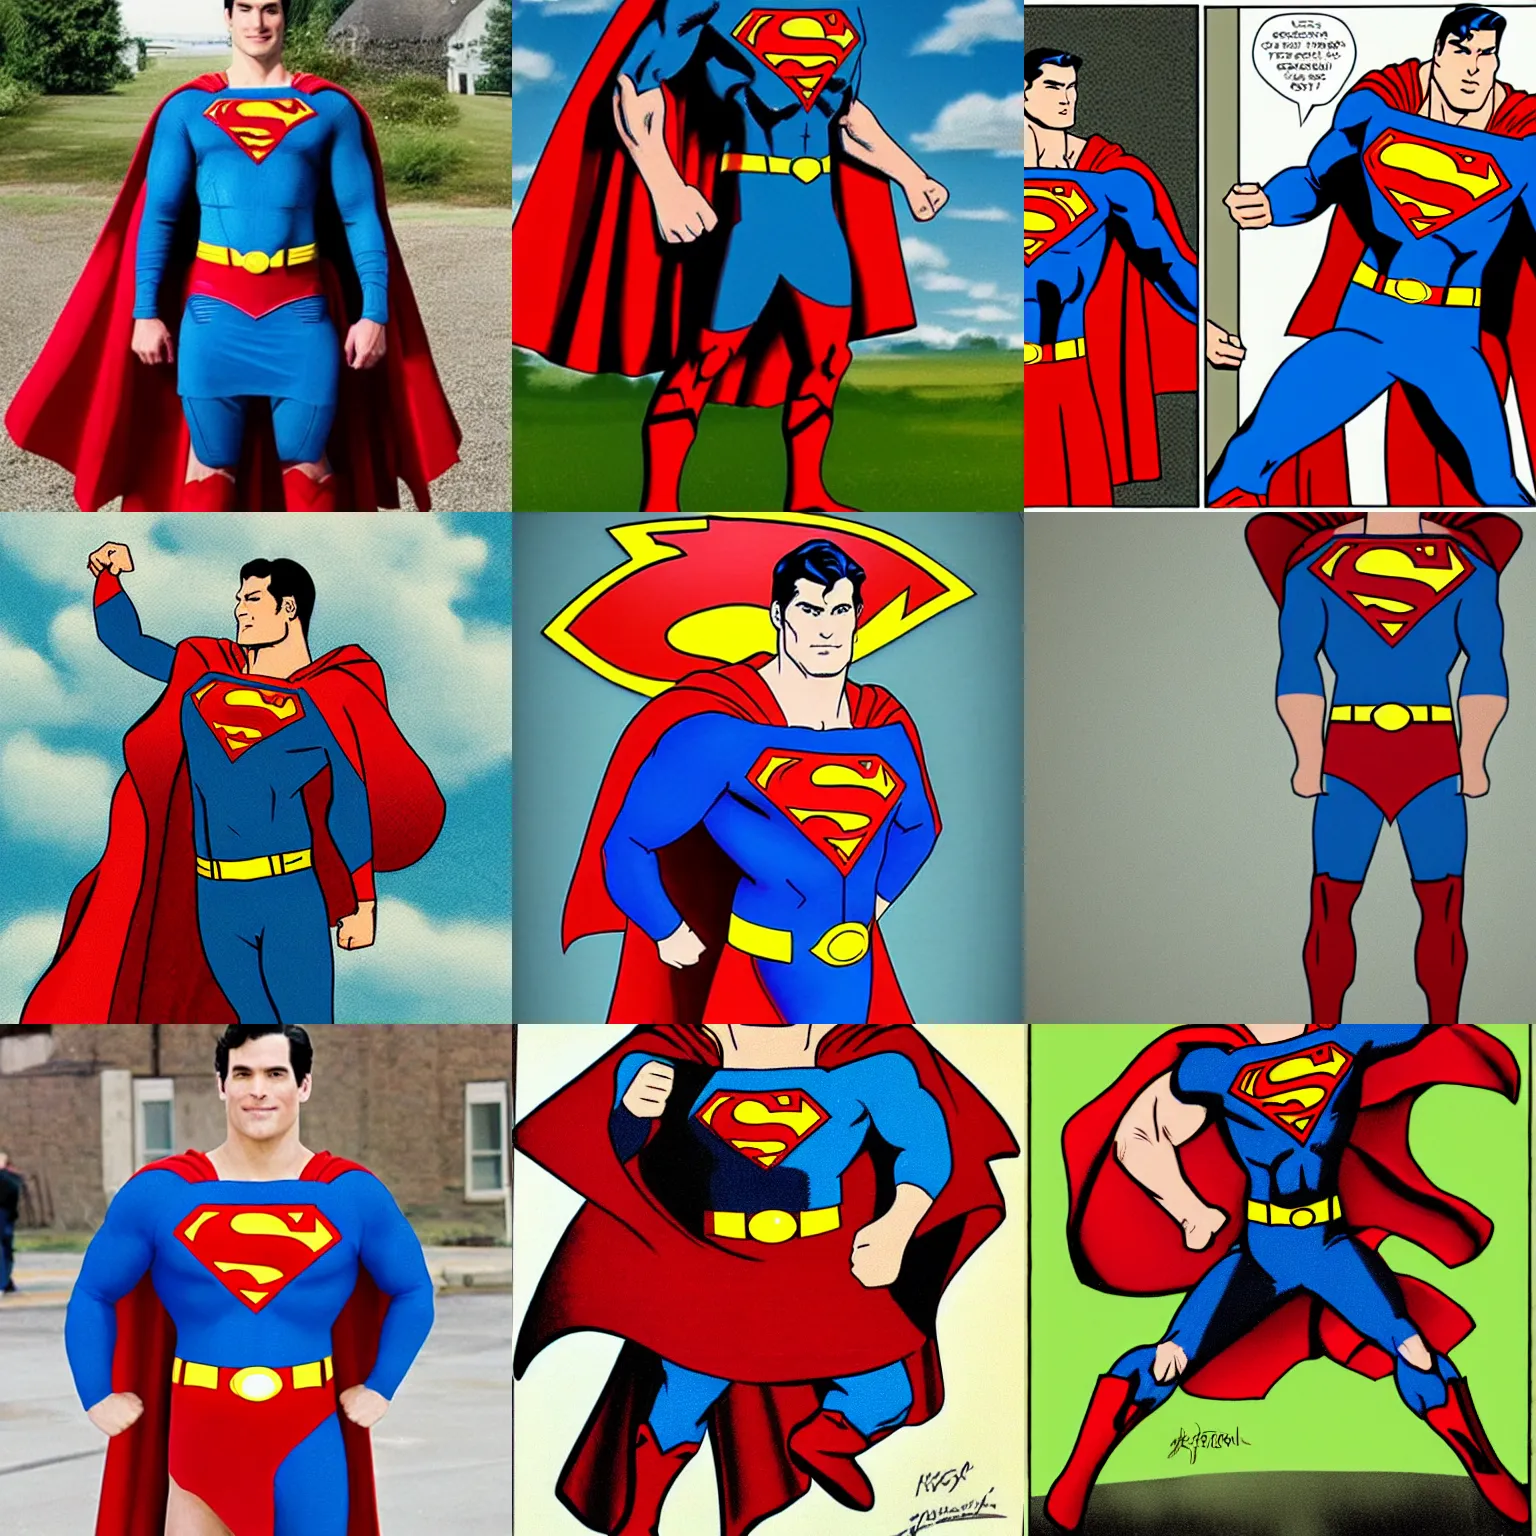 Prompt: Superman wearing a kilt